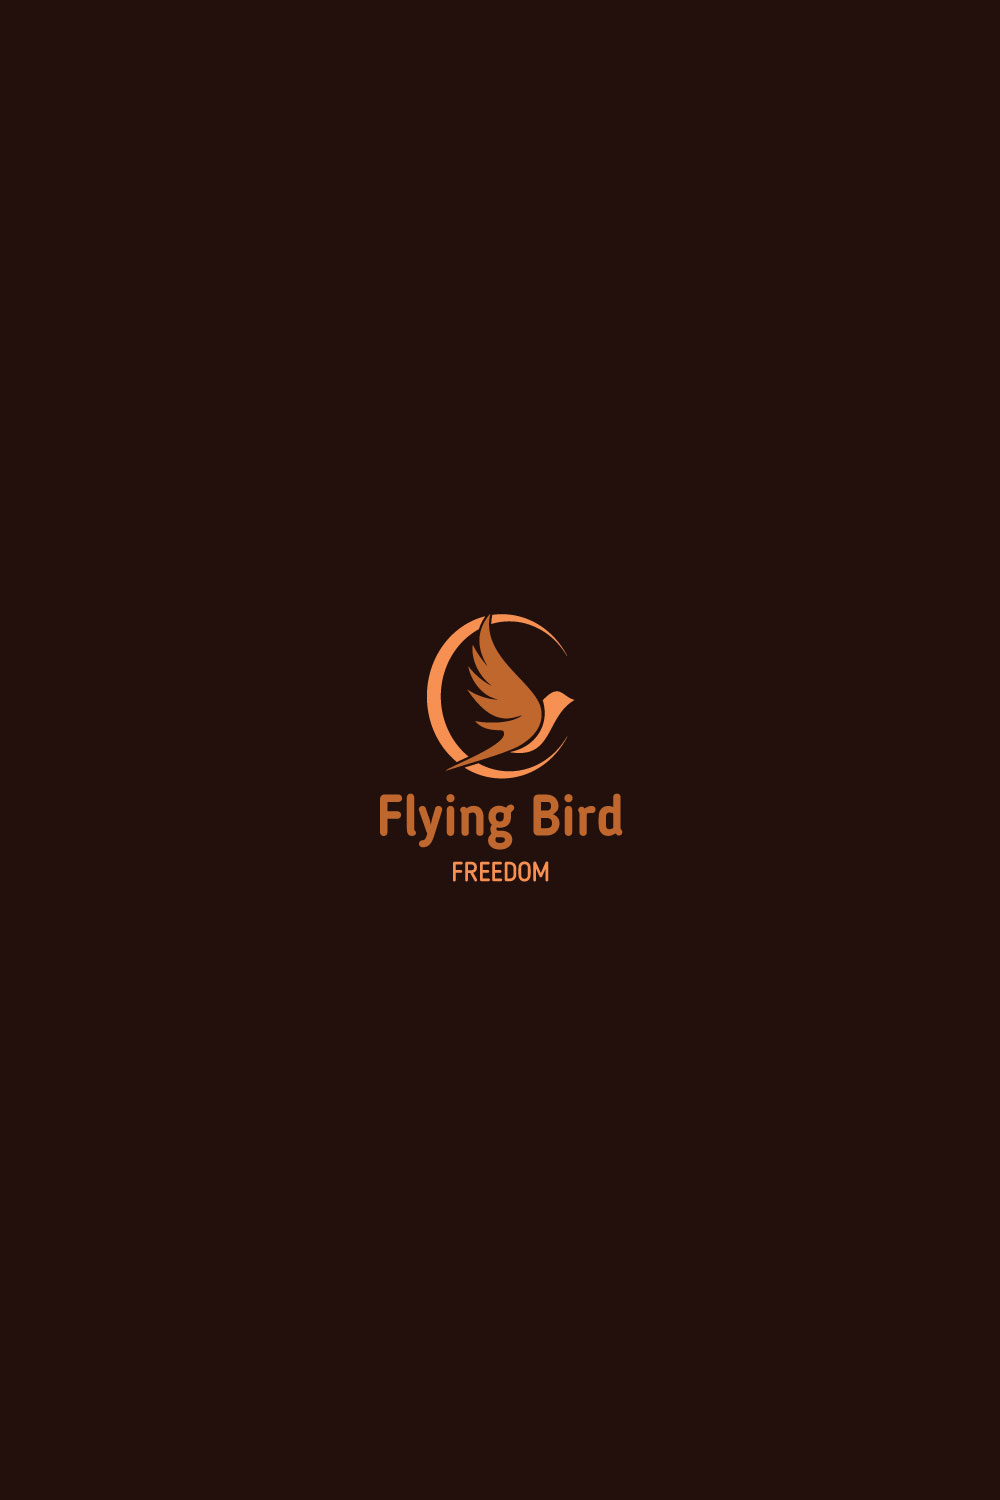 simple Flying bird logo design pinterest preview image.